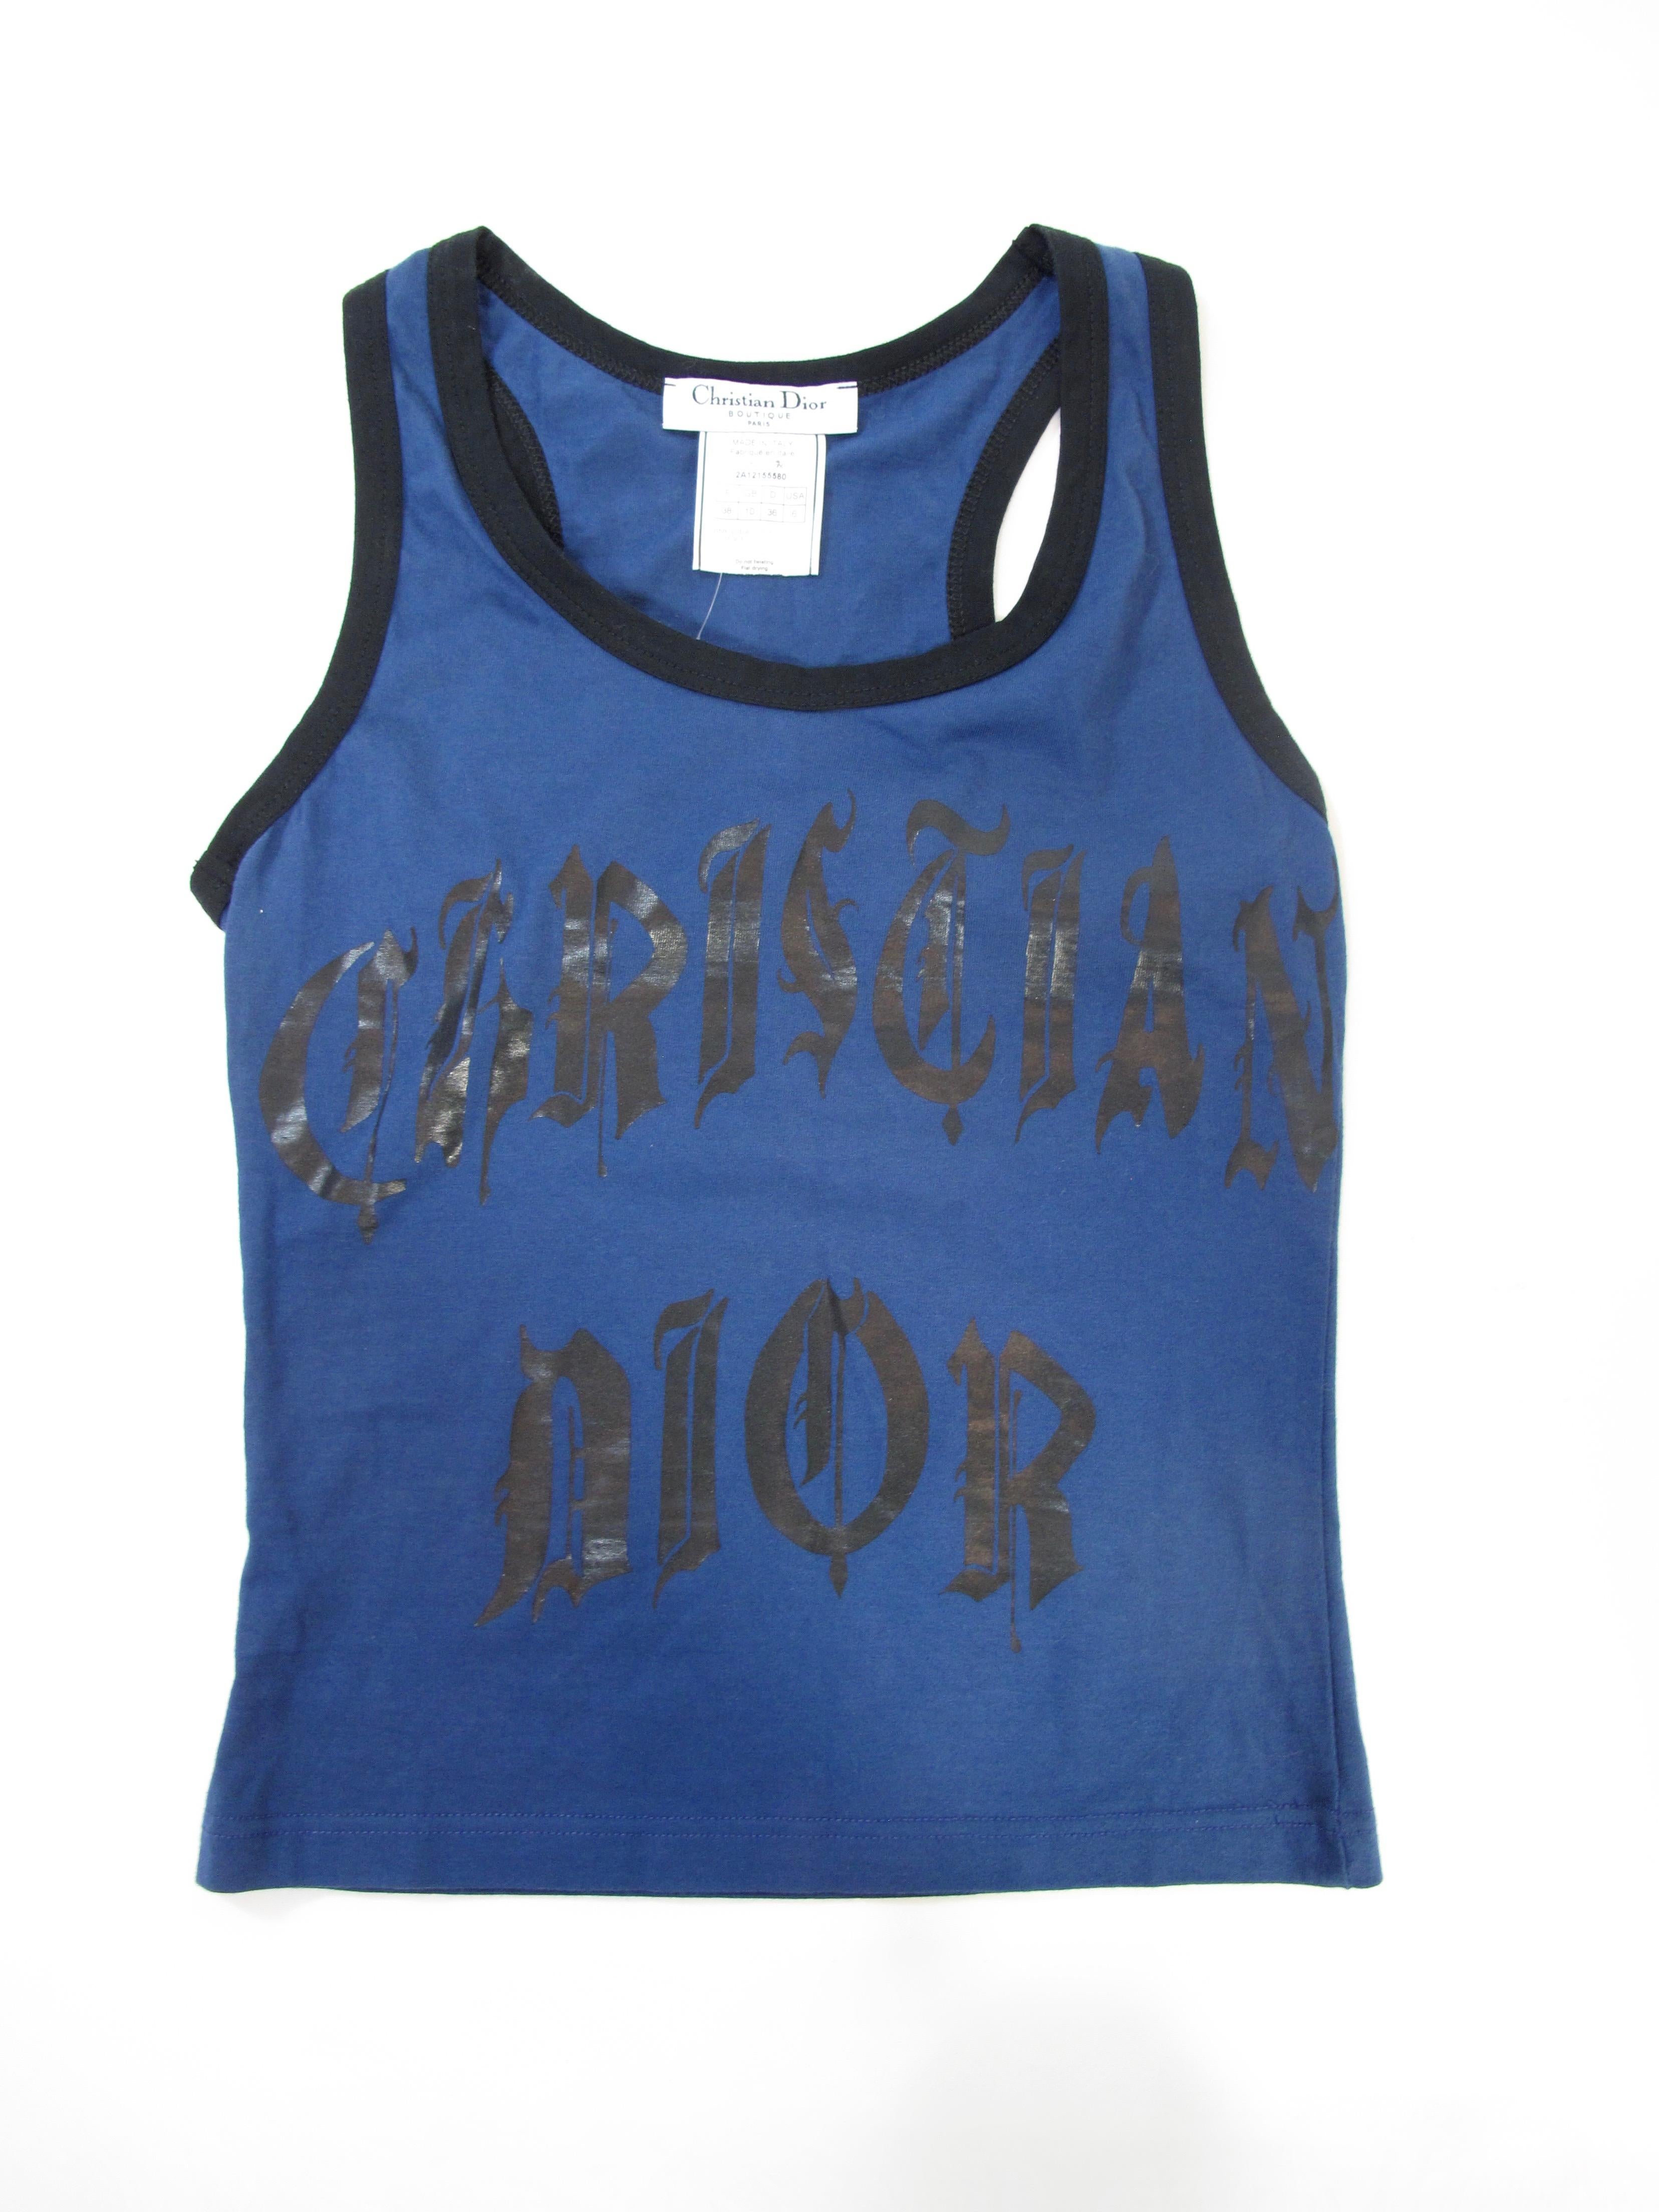 Christian Dior blue gothic cotton tank . Condition: Excellent. Size XS